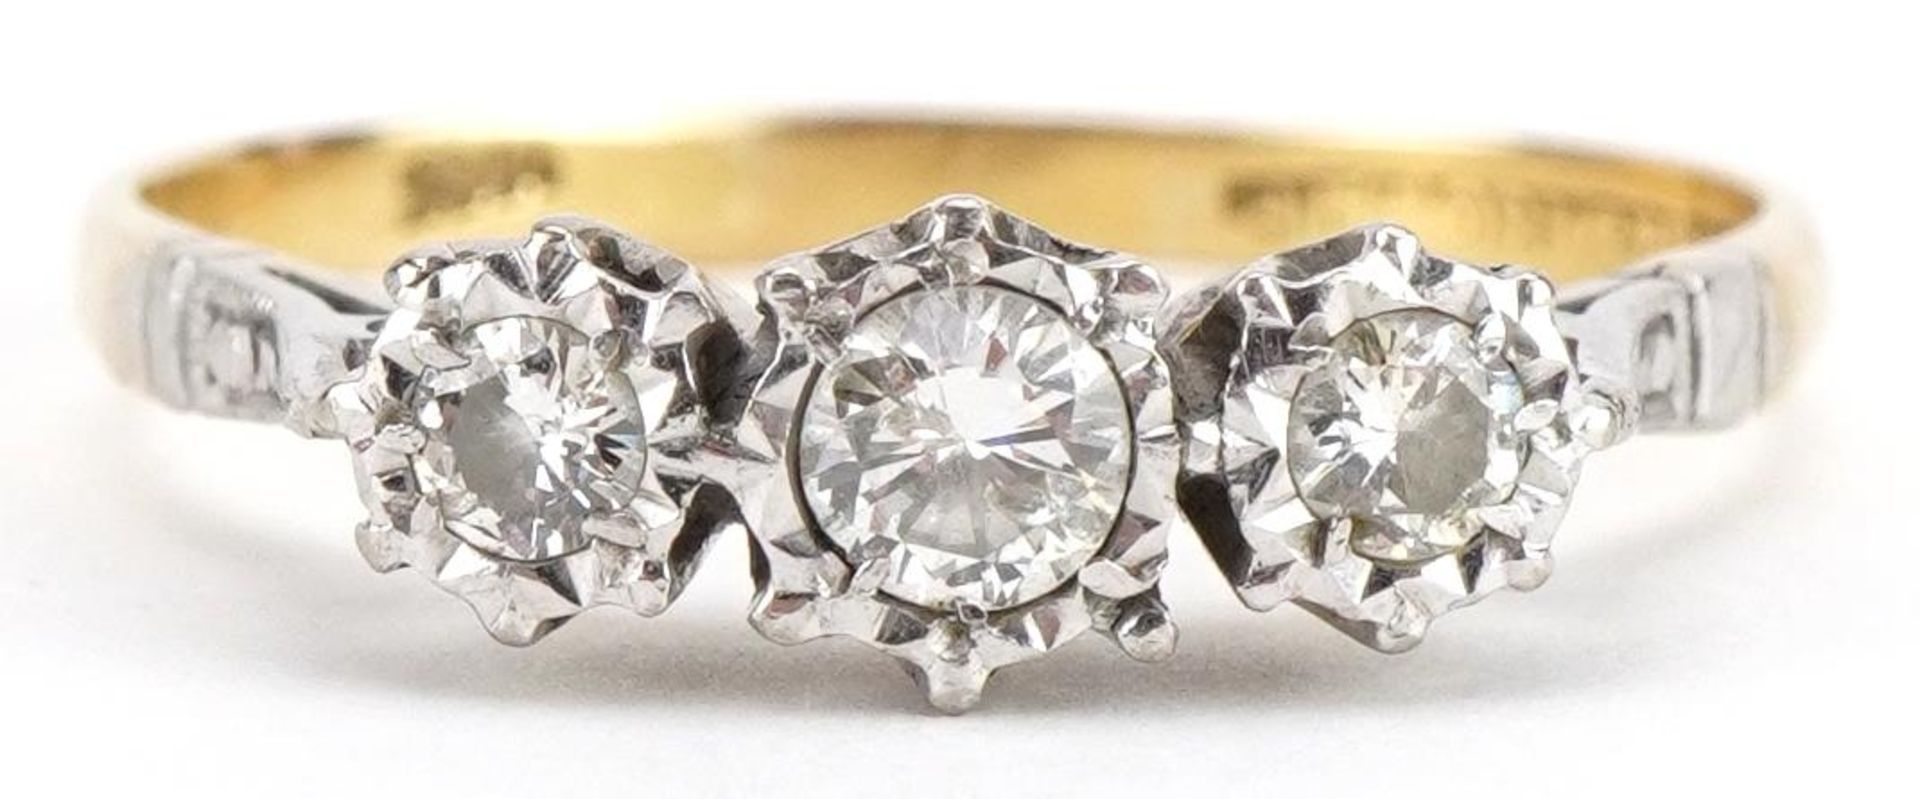 18ct gold and platinum diamond three stone ring, the largest diamond approximately 0.20 carat,